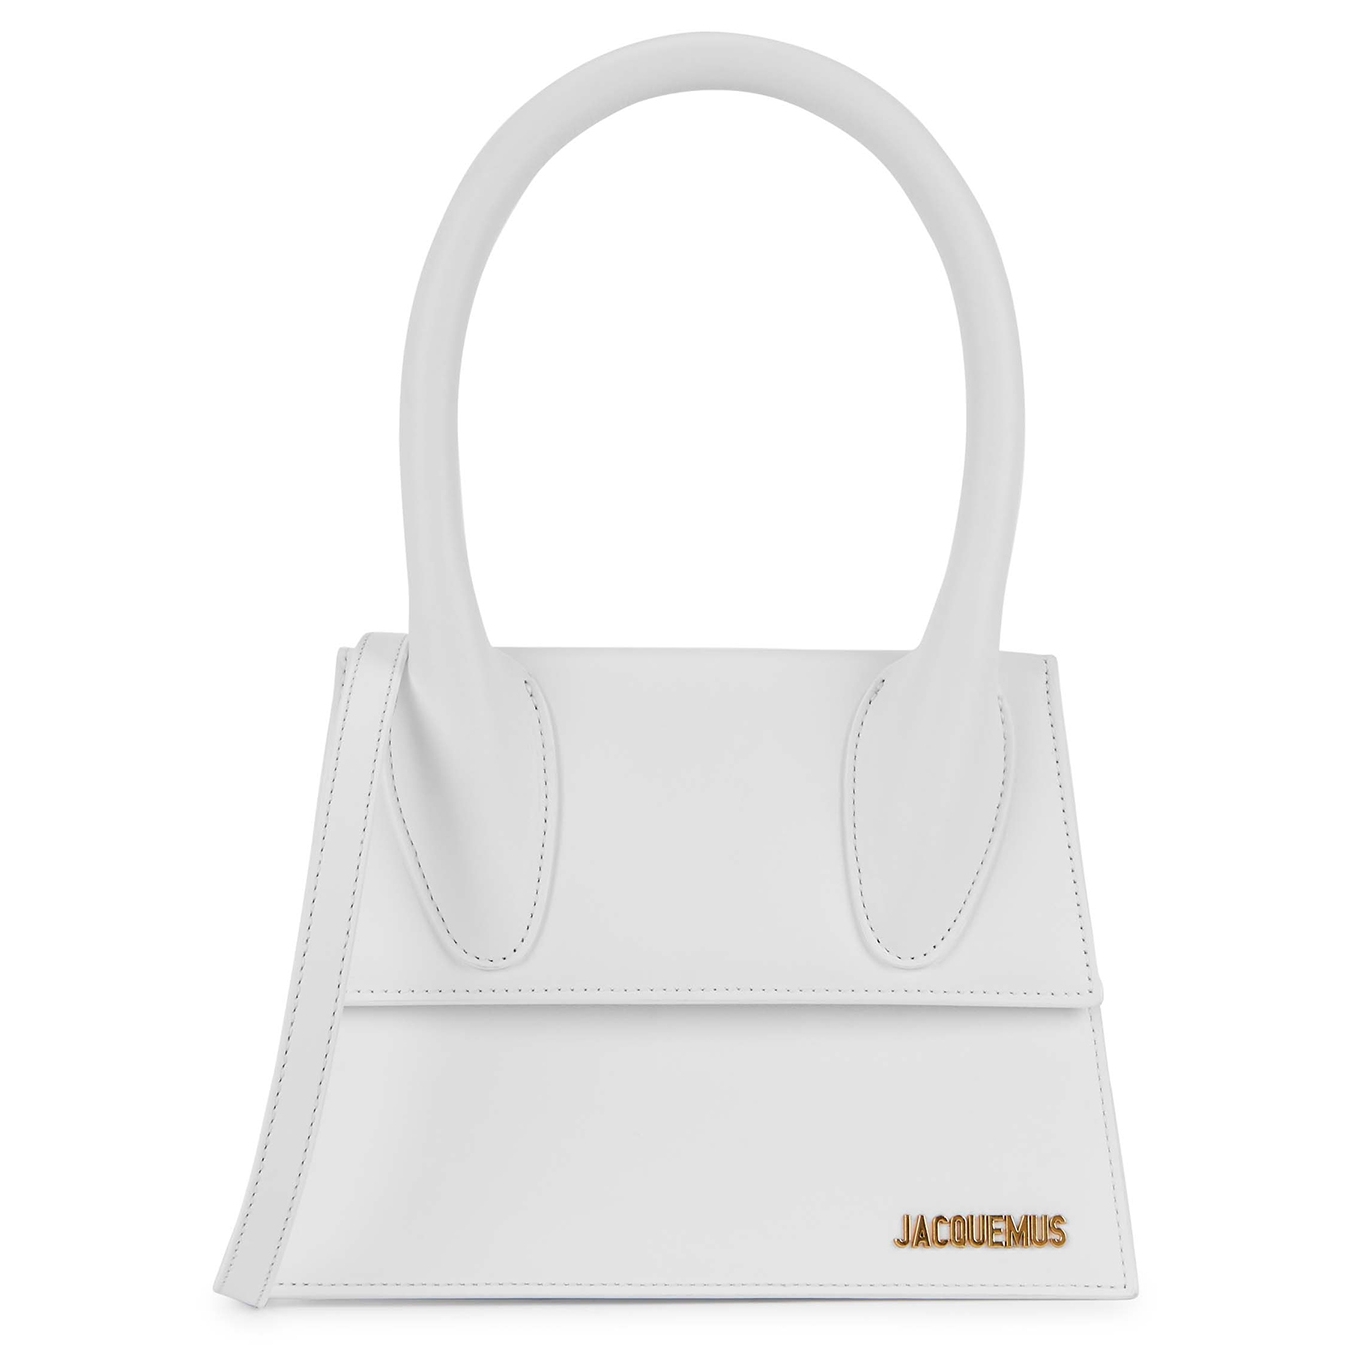 Jacquemus Le Grande Chiquito White Leather Top Handle Bag